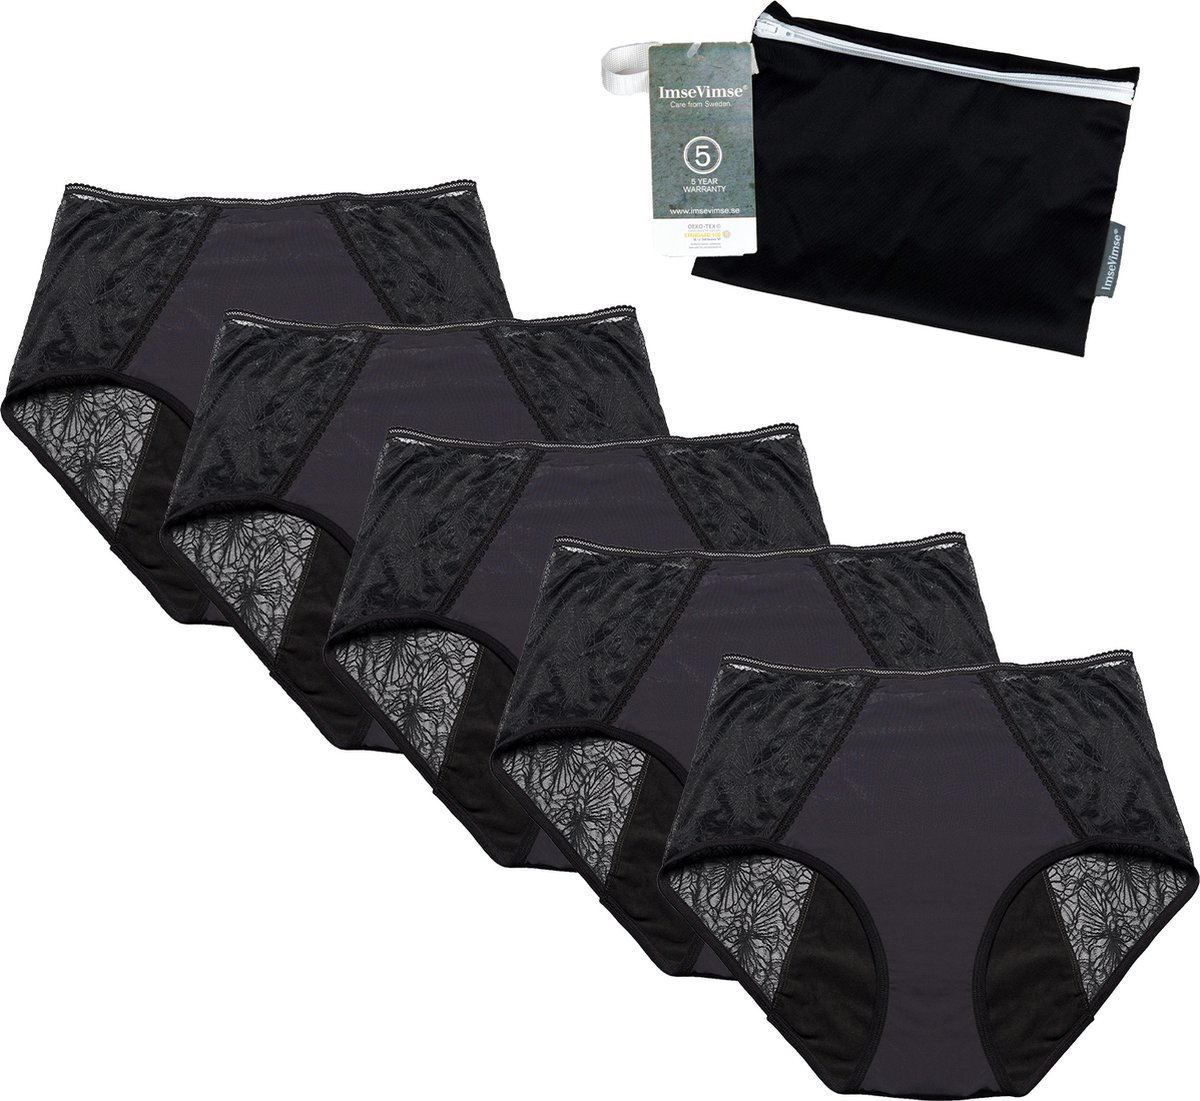 Cheeky Pants Feeling Fearless Set - 5x Menstruatieondergoed - Maat 46-48 - Extra absorptie - High-Rise - Zero waste - Comfort - Sportief ontwerp